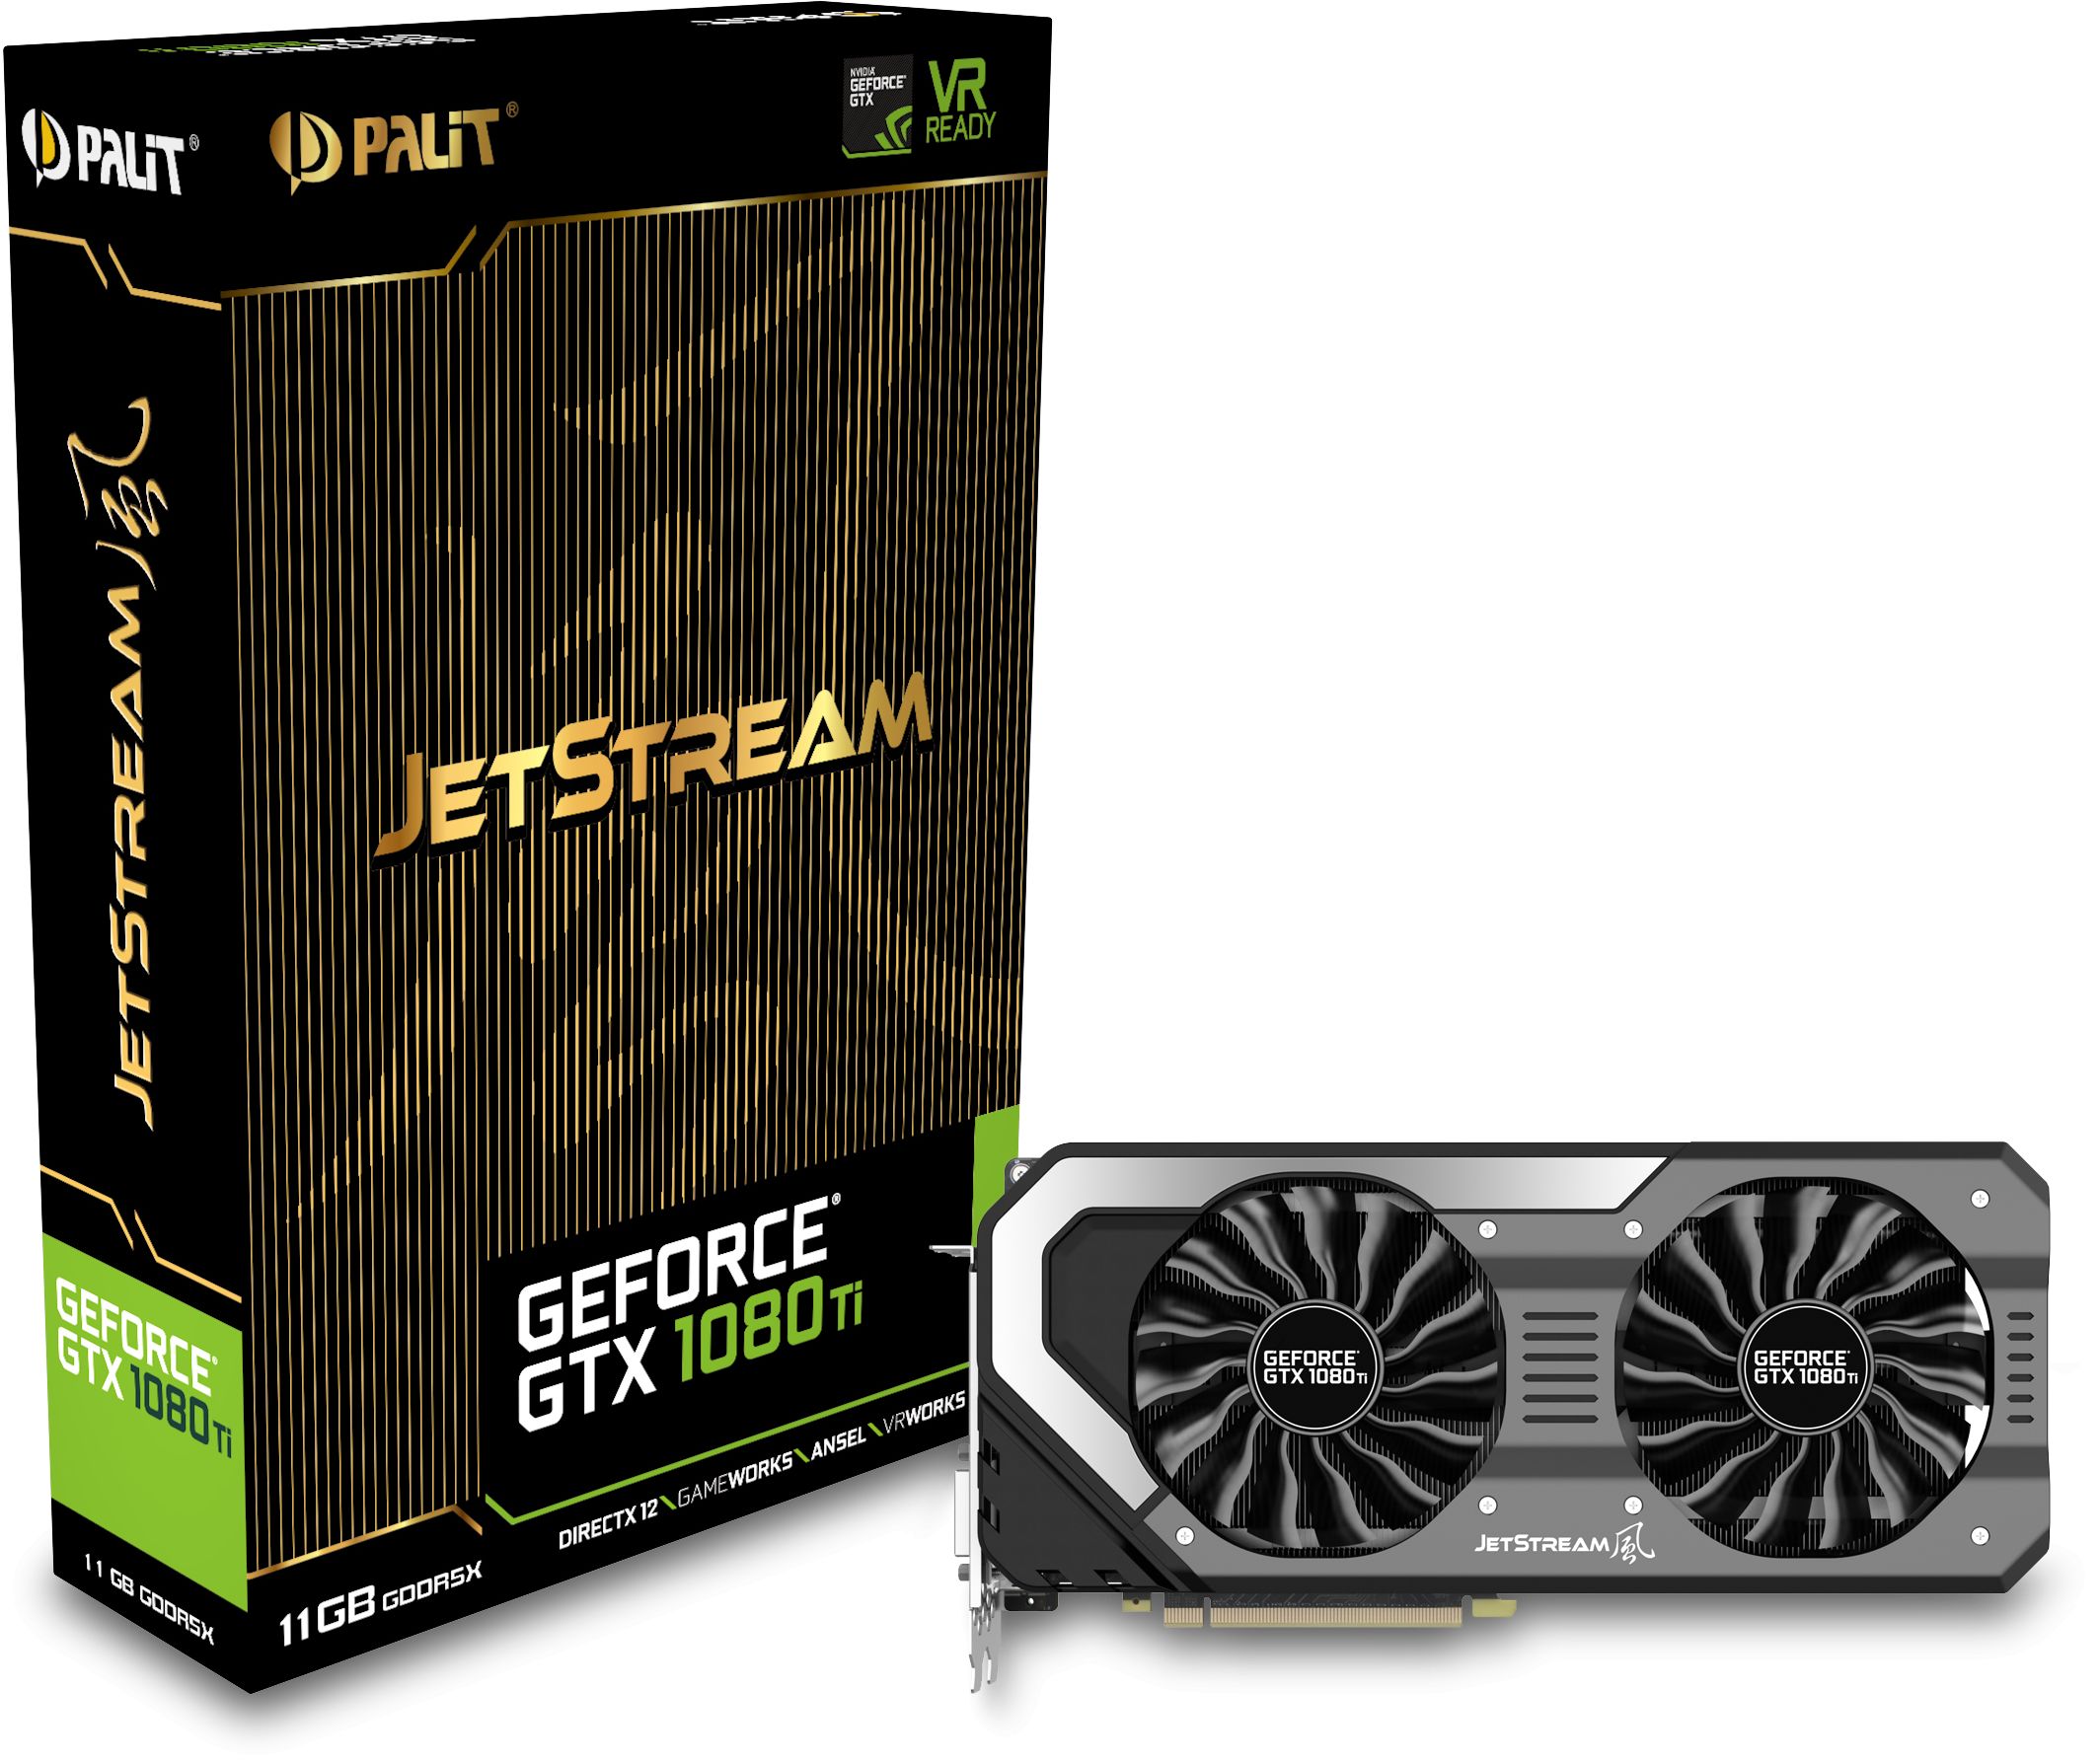 Geforce GTX 1080 Ti JetStream 11GB 